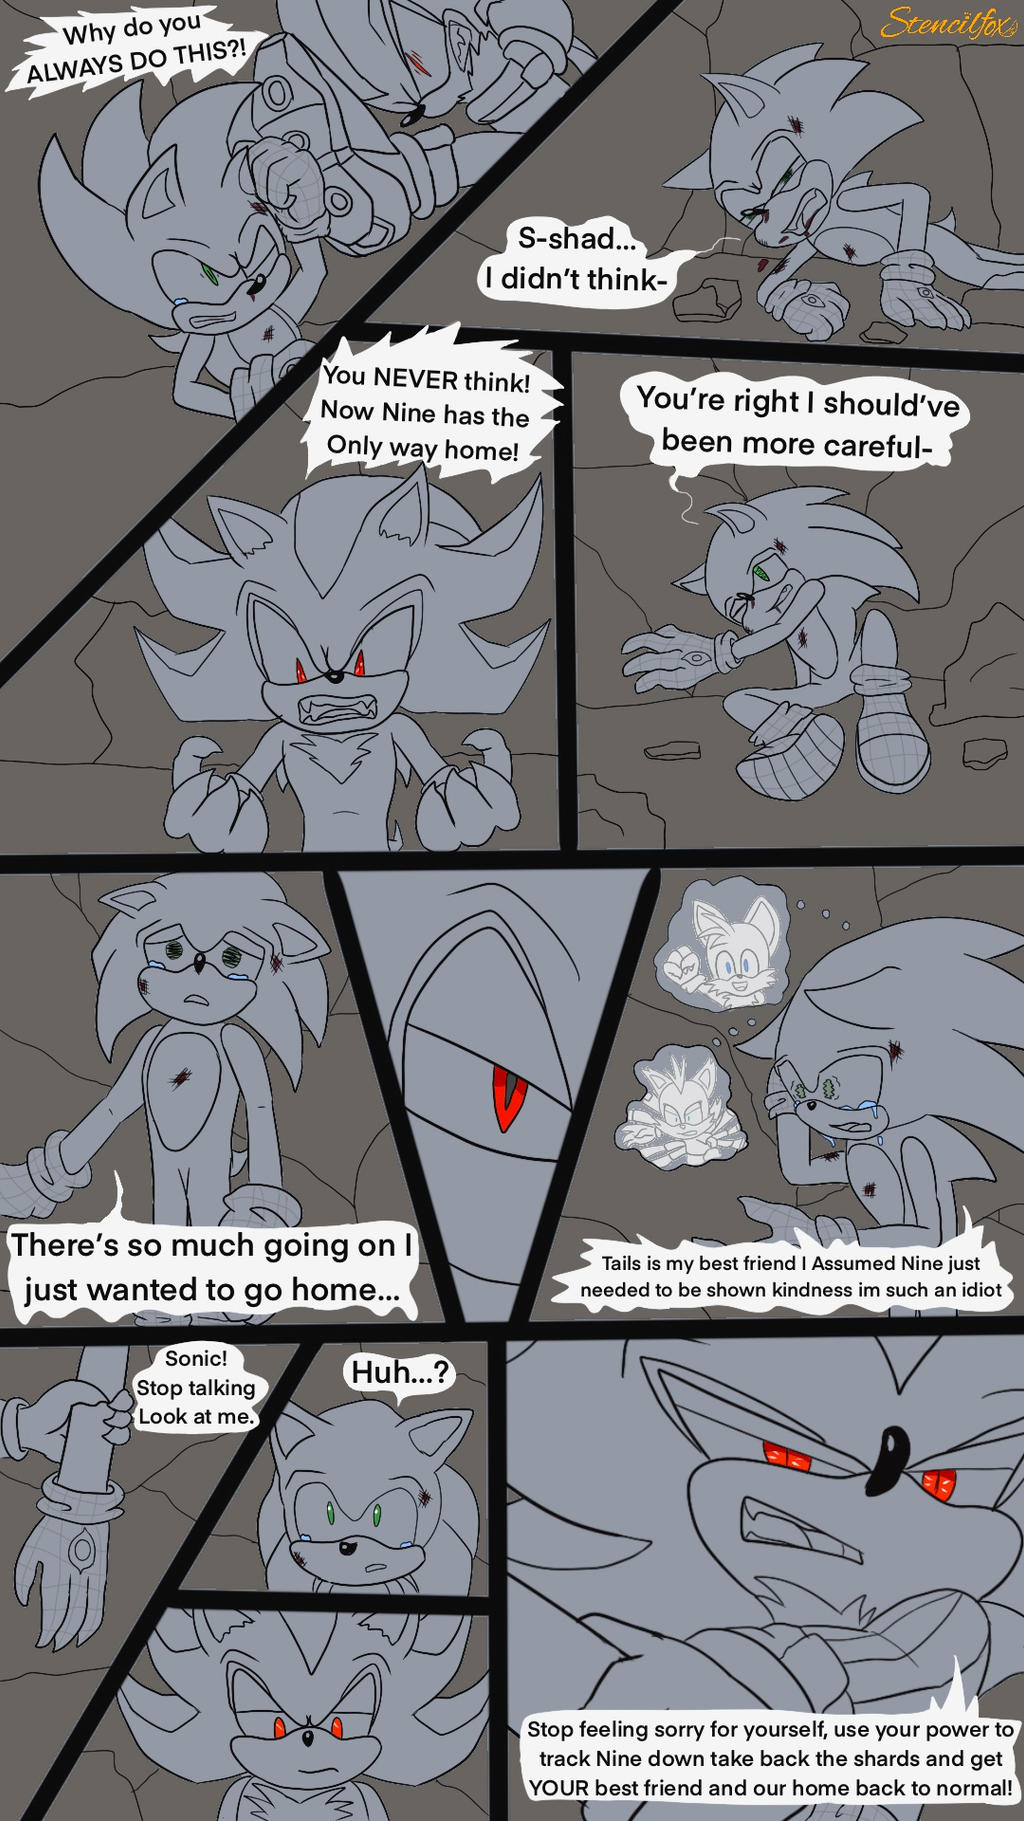 Sonic Prime Journey S1 Episode 3 (Part 3) - Comic Studio